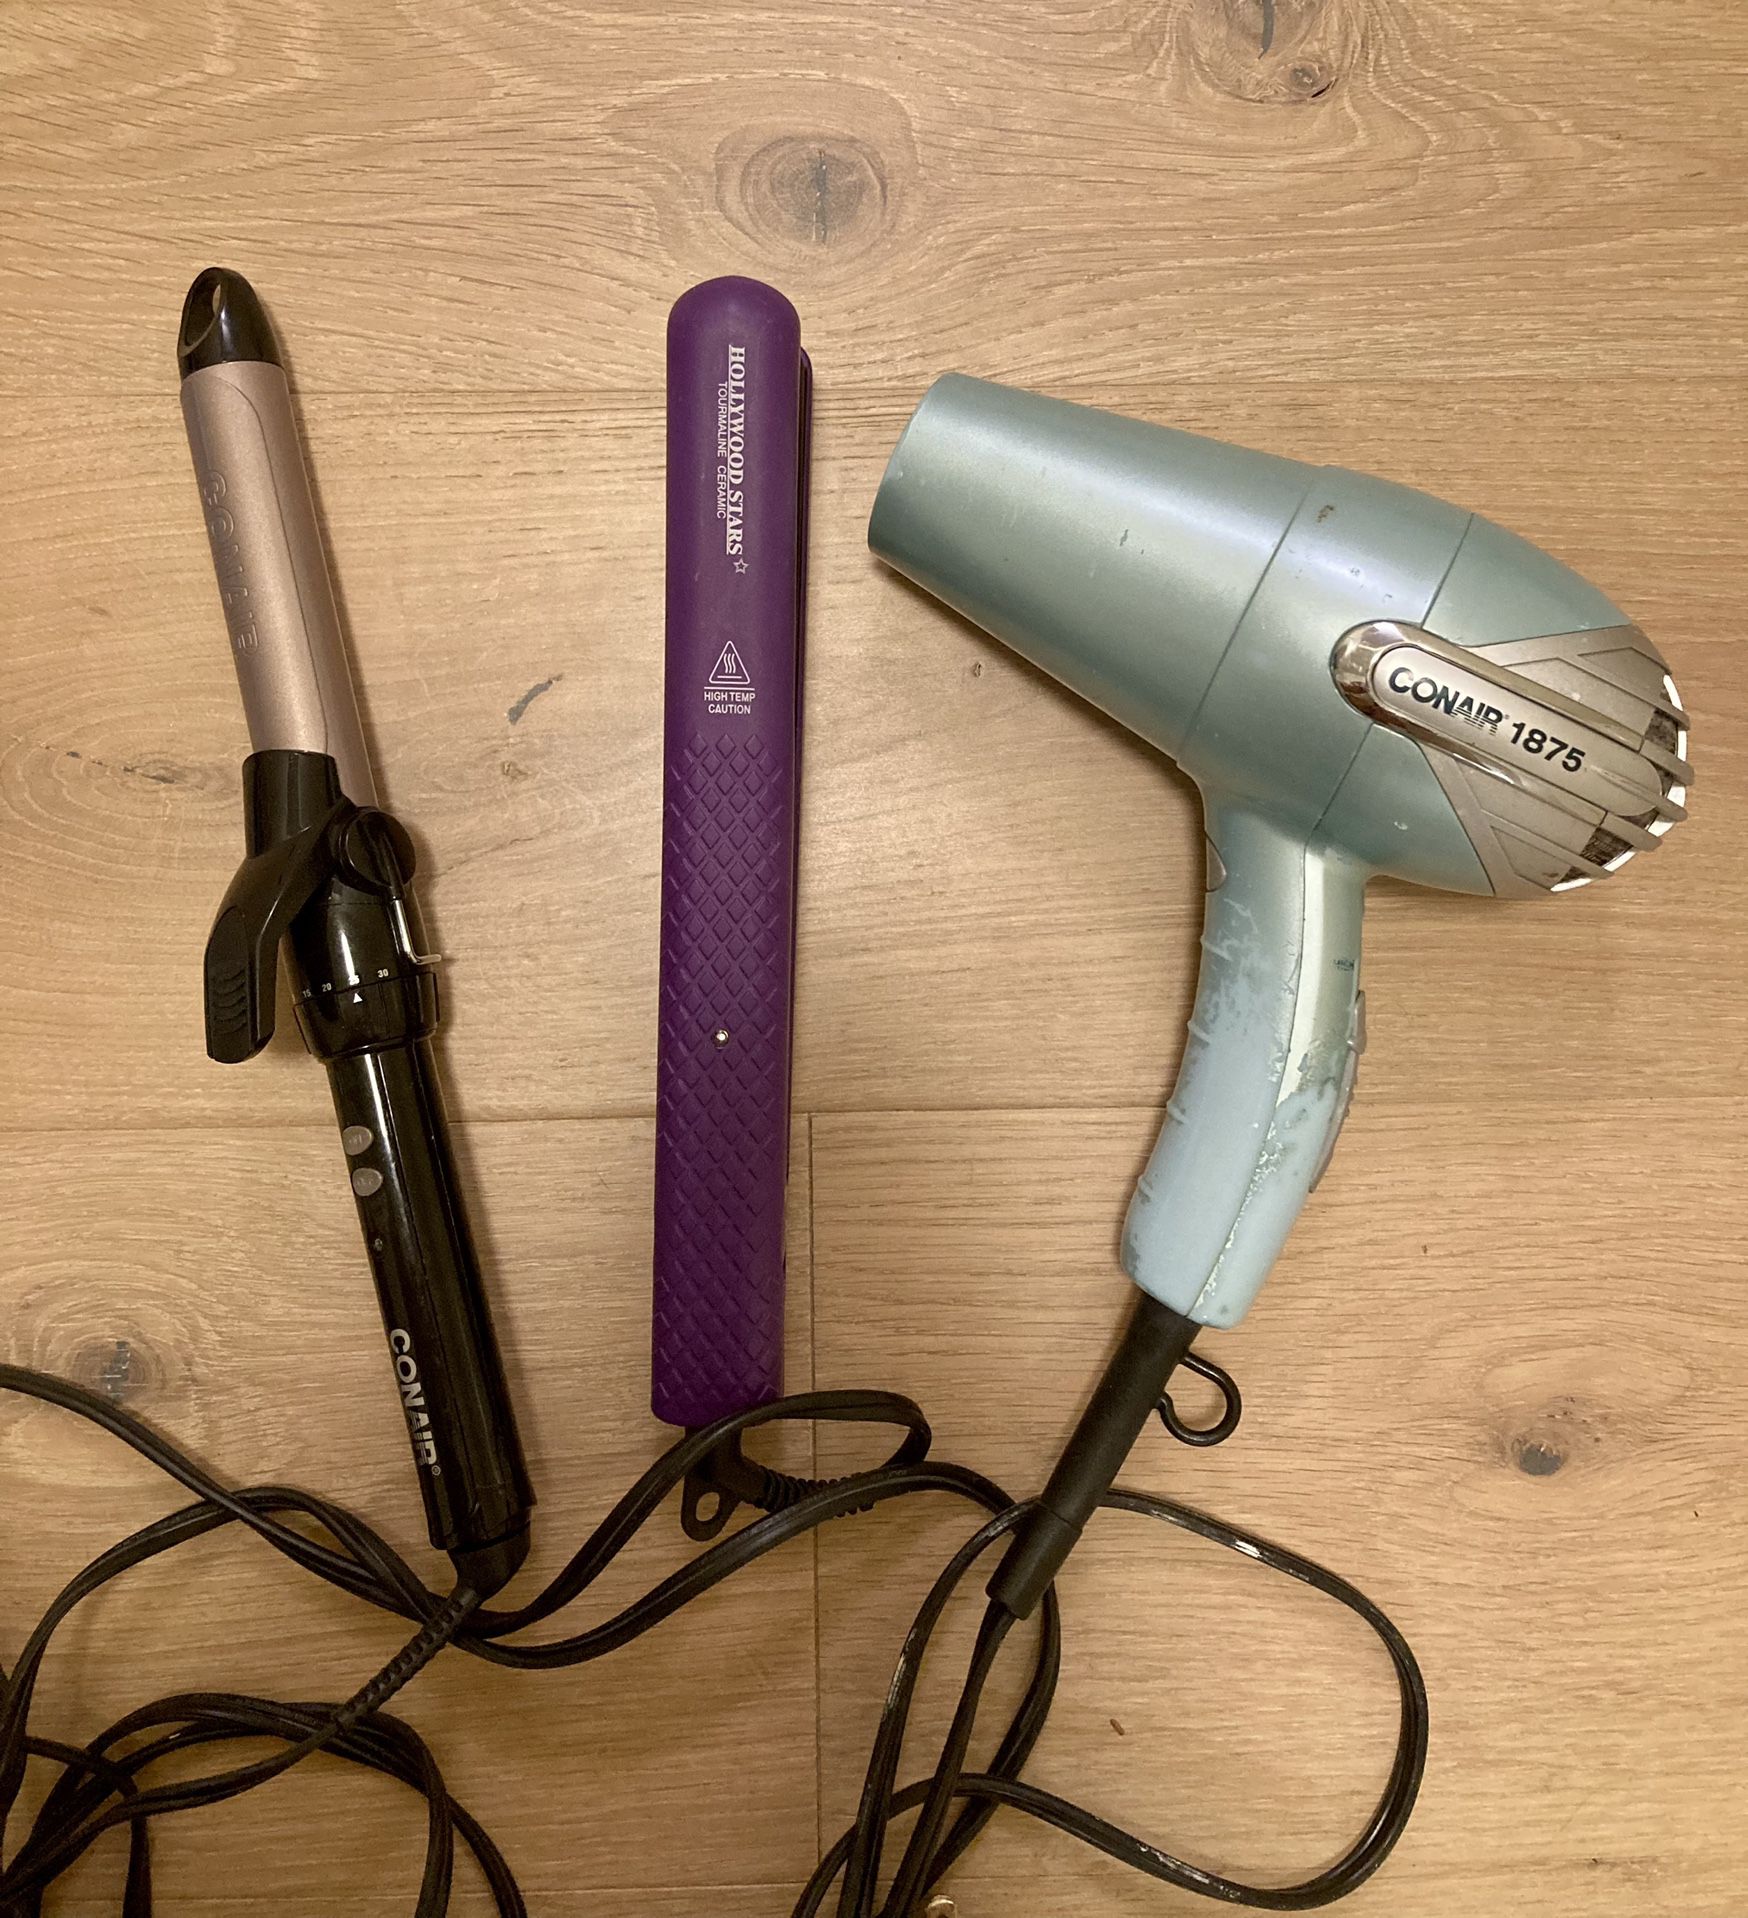 Hair Tools - Curler, Straightener, Dryer